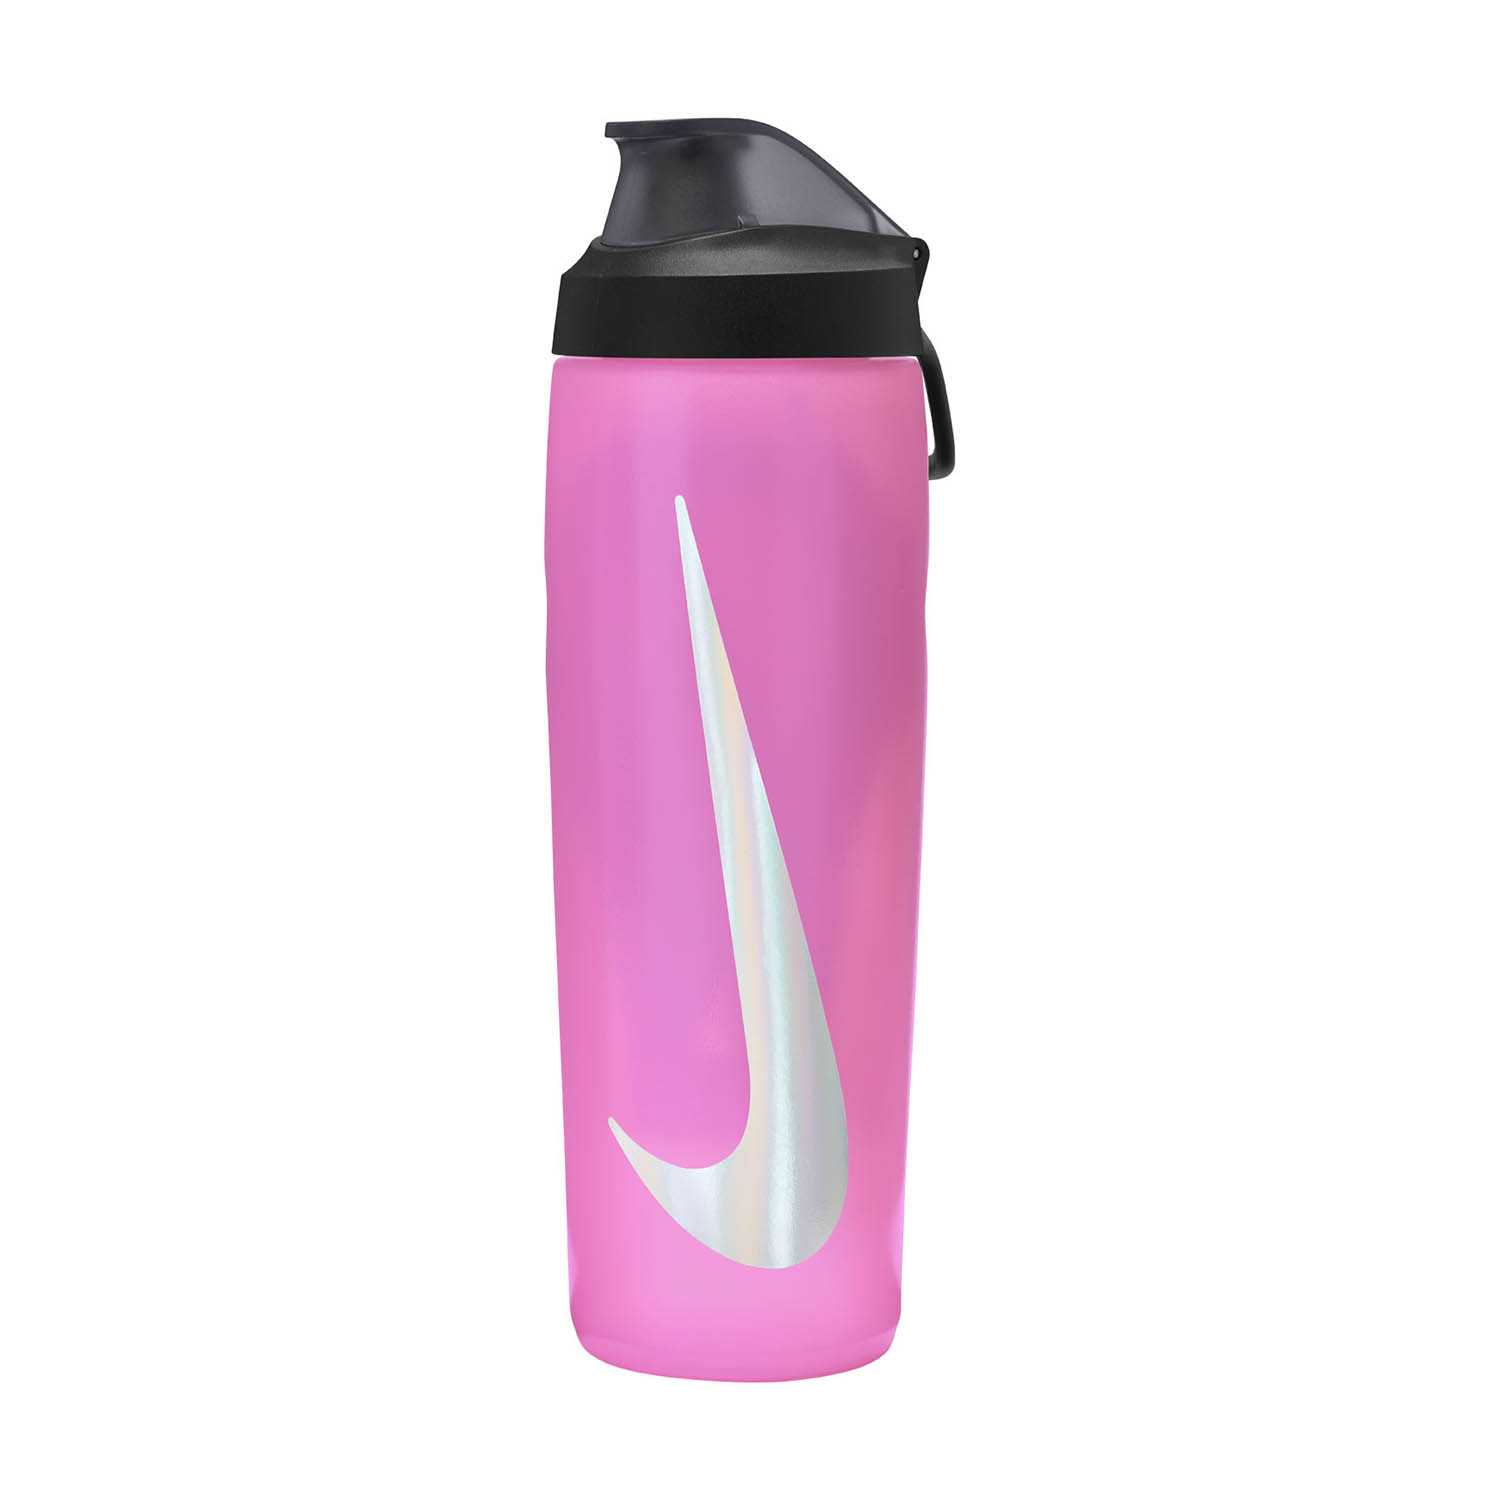 Nike Refuel Locking Cantimplora - Pink Spell/Black/Silver Iridescent